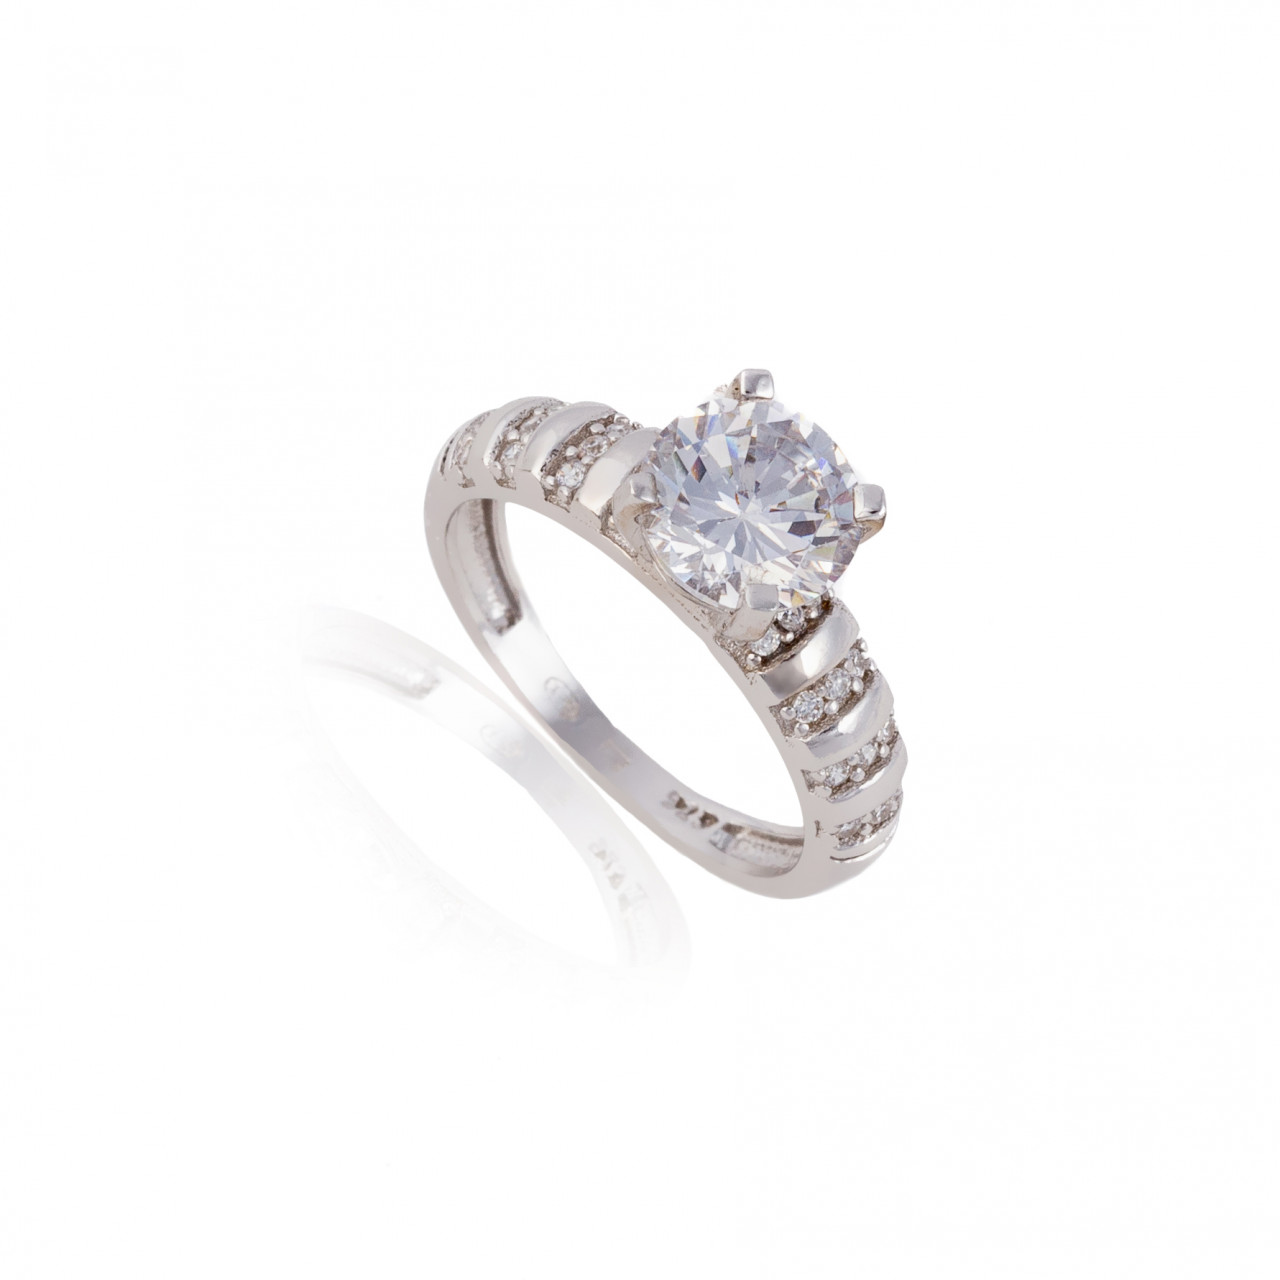 inelul de logodna si verigheta pe acelasi deget Inel de logodna din argint 925 2.7g (Marime Inel-Verigheta: M51)